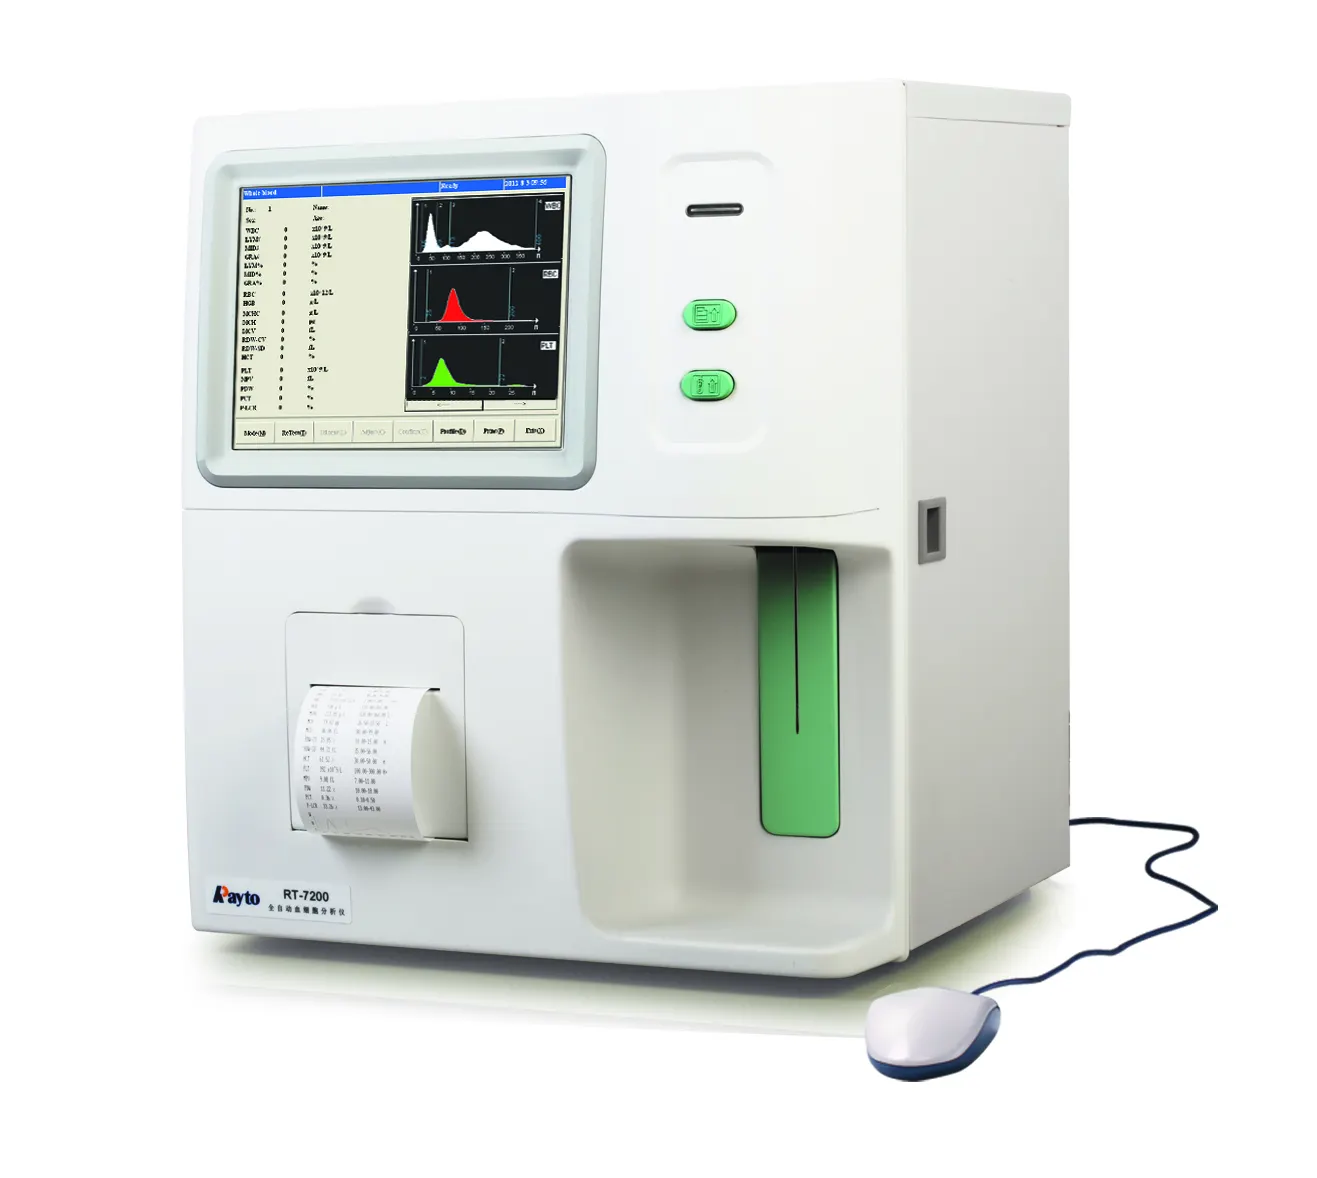 Rayto RT-7200 RT-7300 Fully Auto Blood analyzer, hematology analyzer price